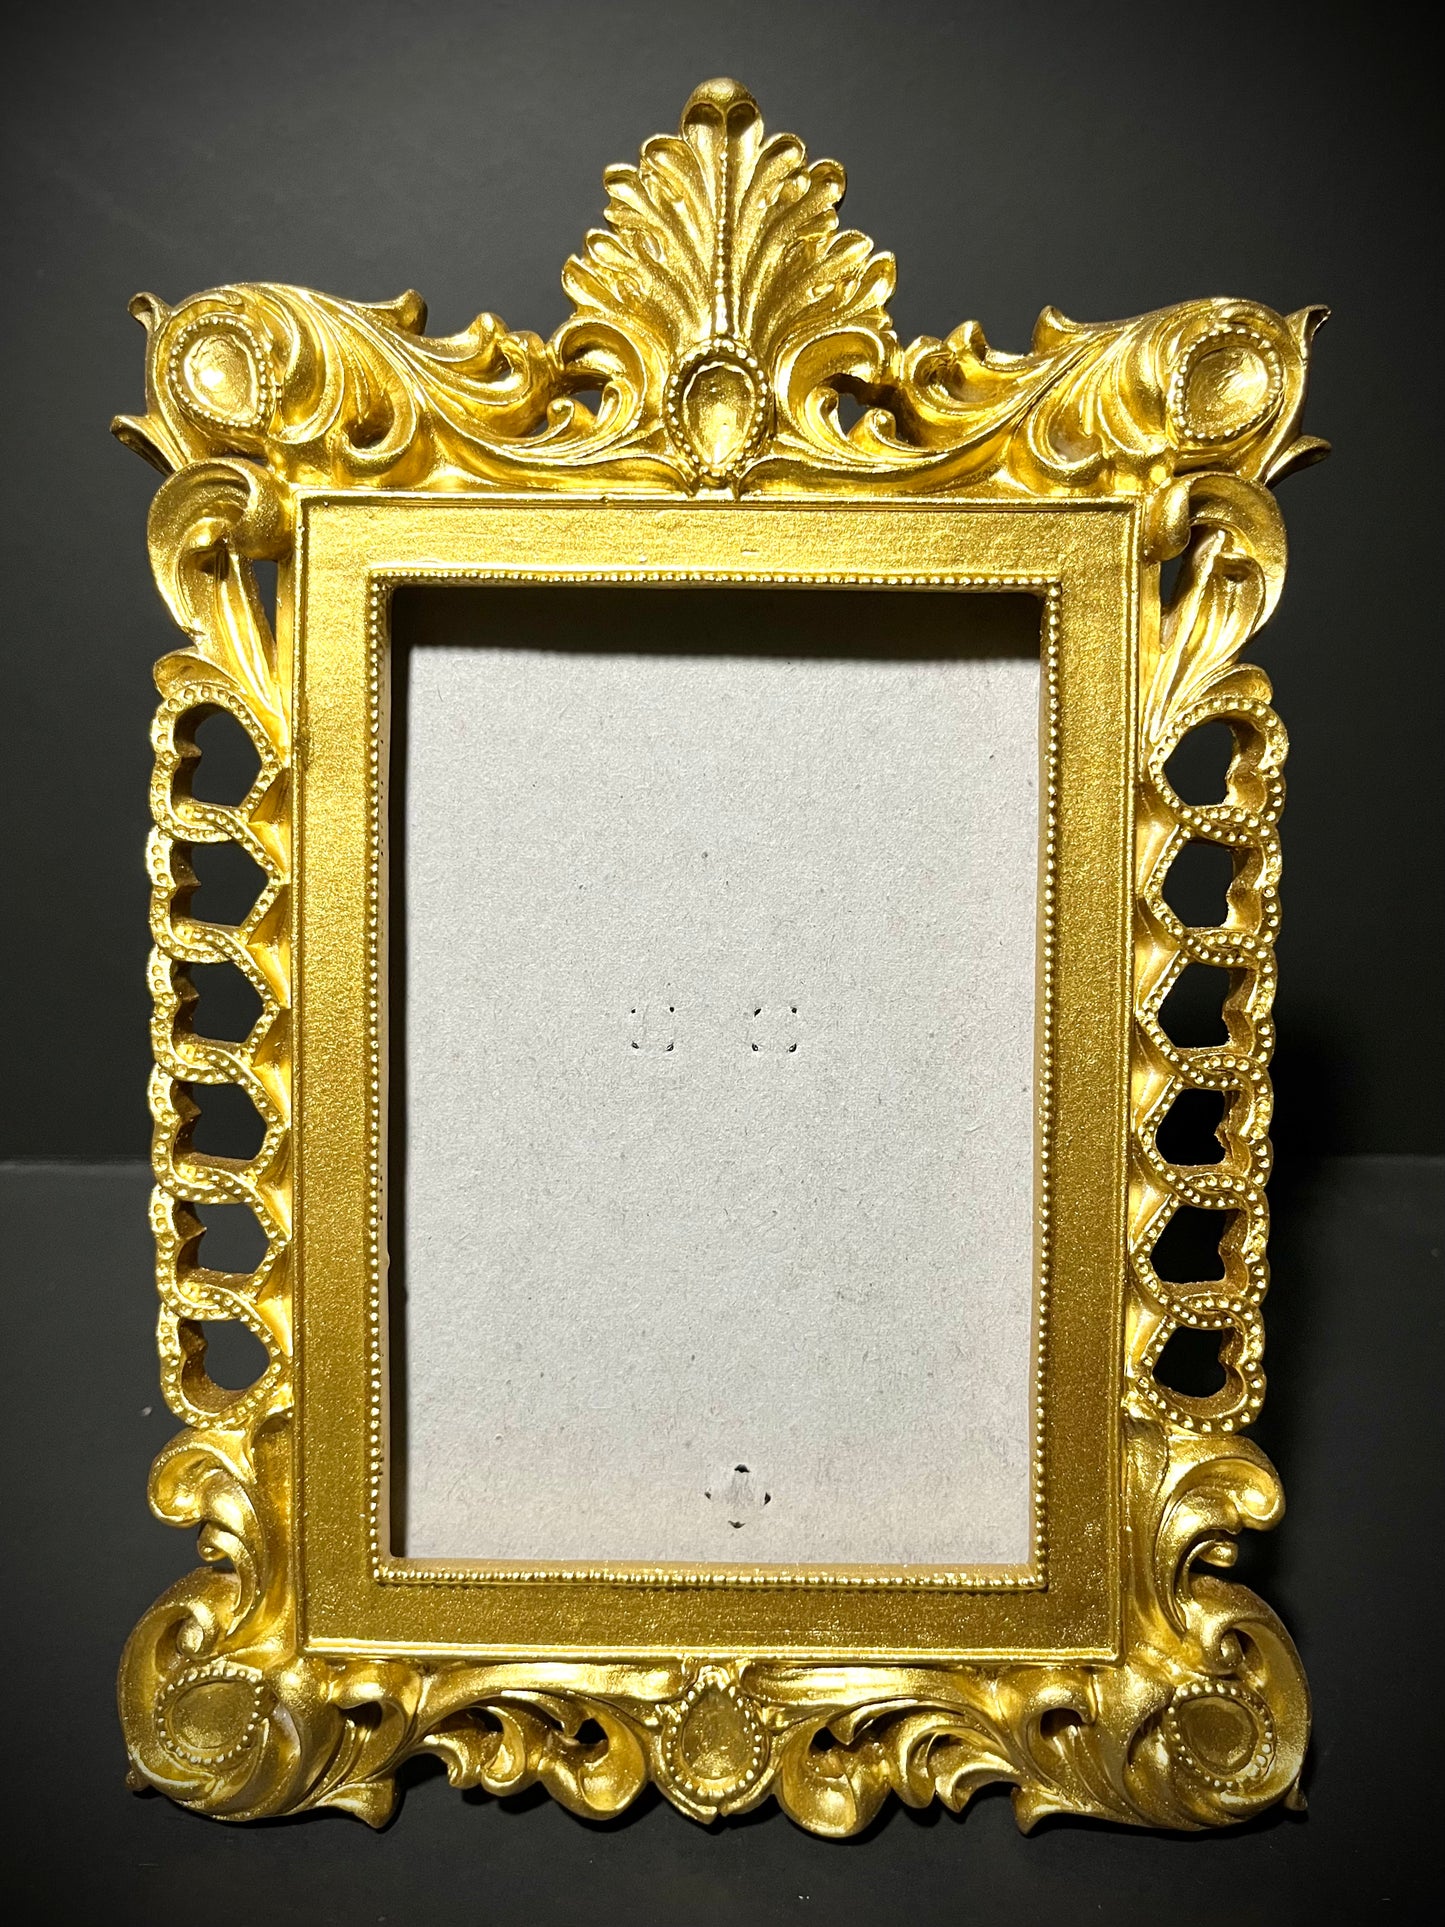 Standard heart & antique frame